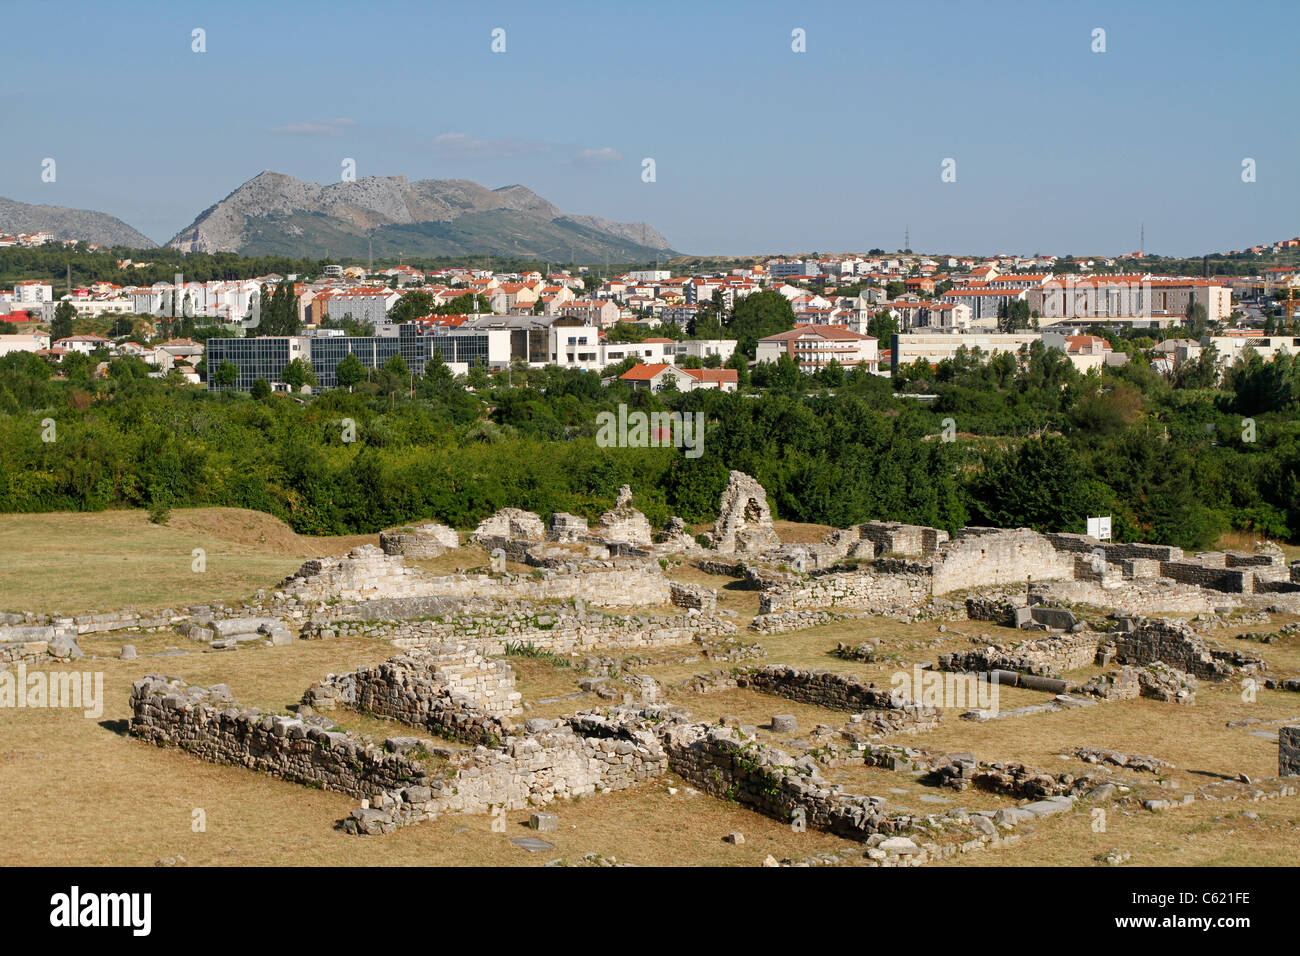 Ruins of basilicas and baths, Roman city of Salona near Split, Croatia Stock Photo